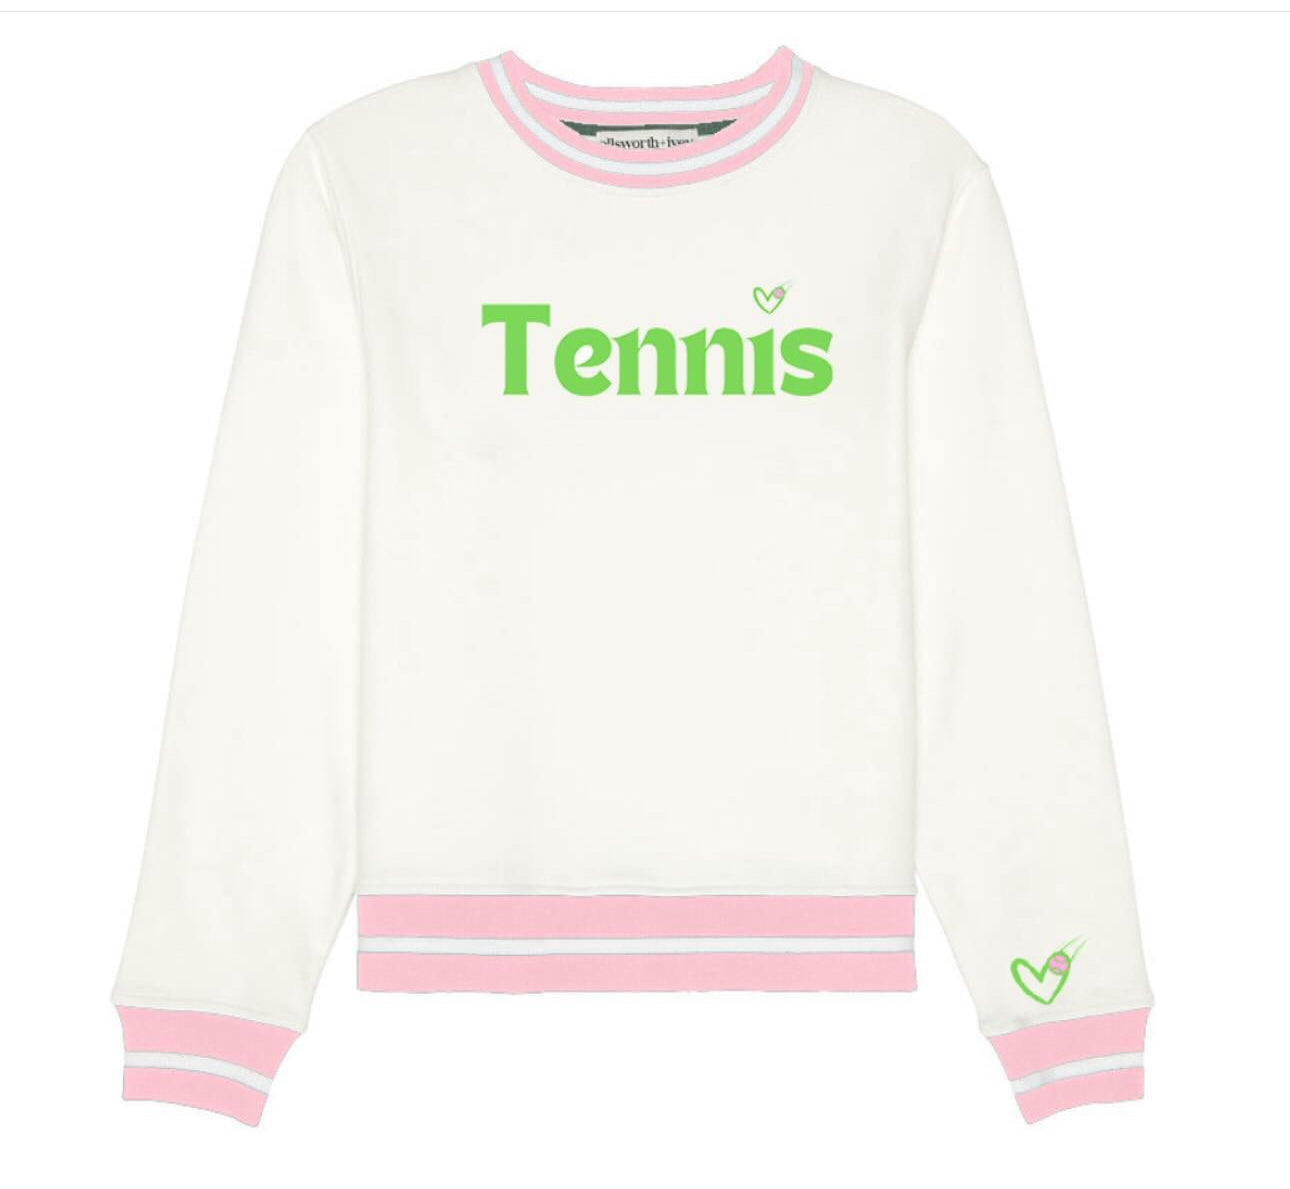 Pink Tennis scuba sweatshirt